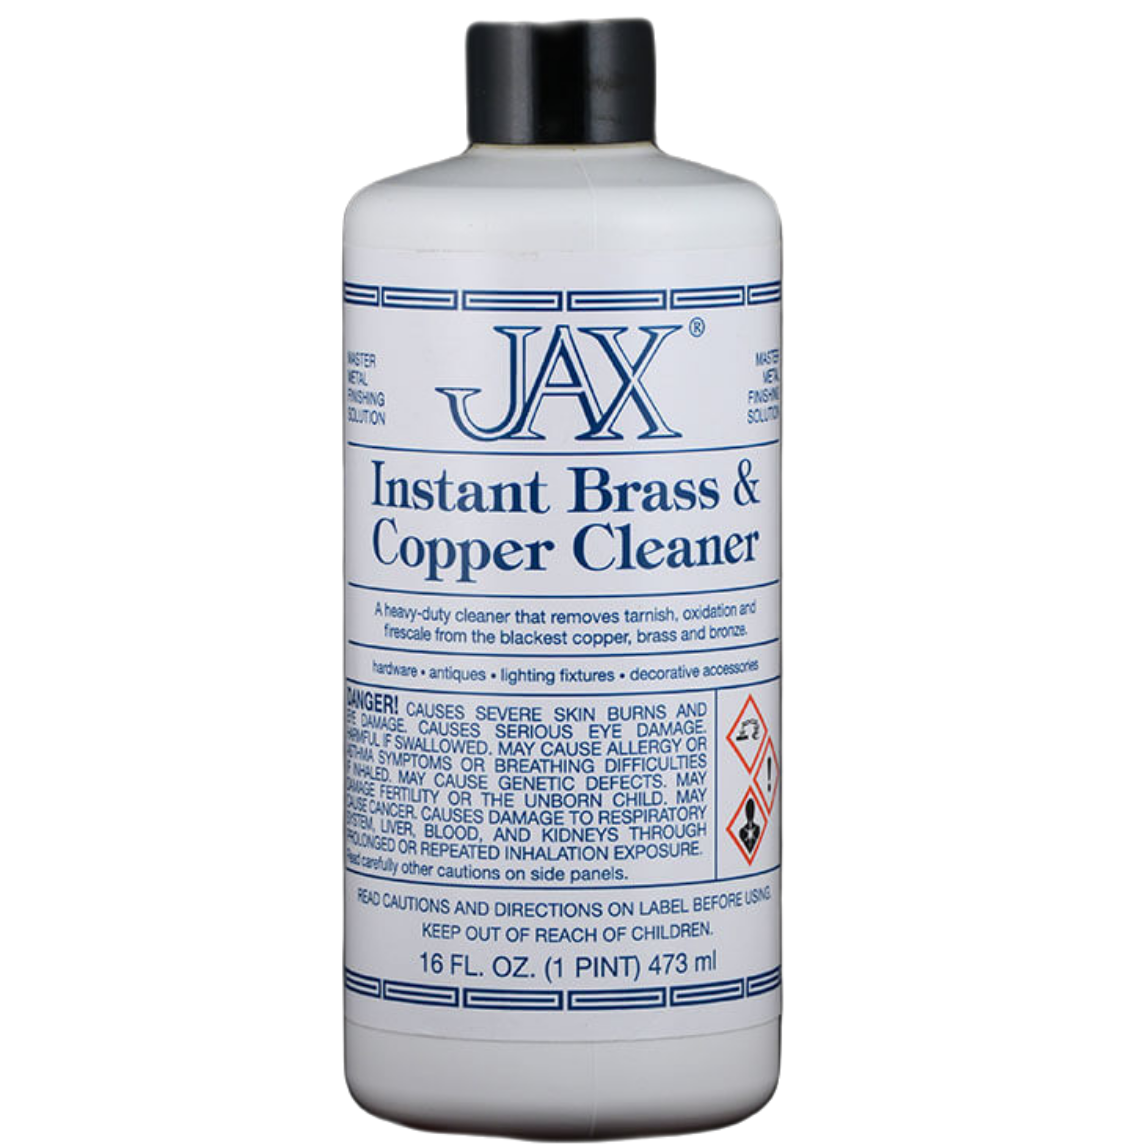 Jax Instant Brass, Copper Cleaner